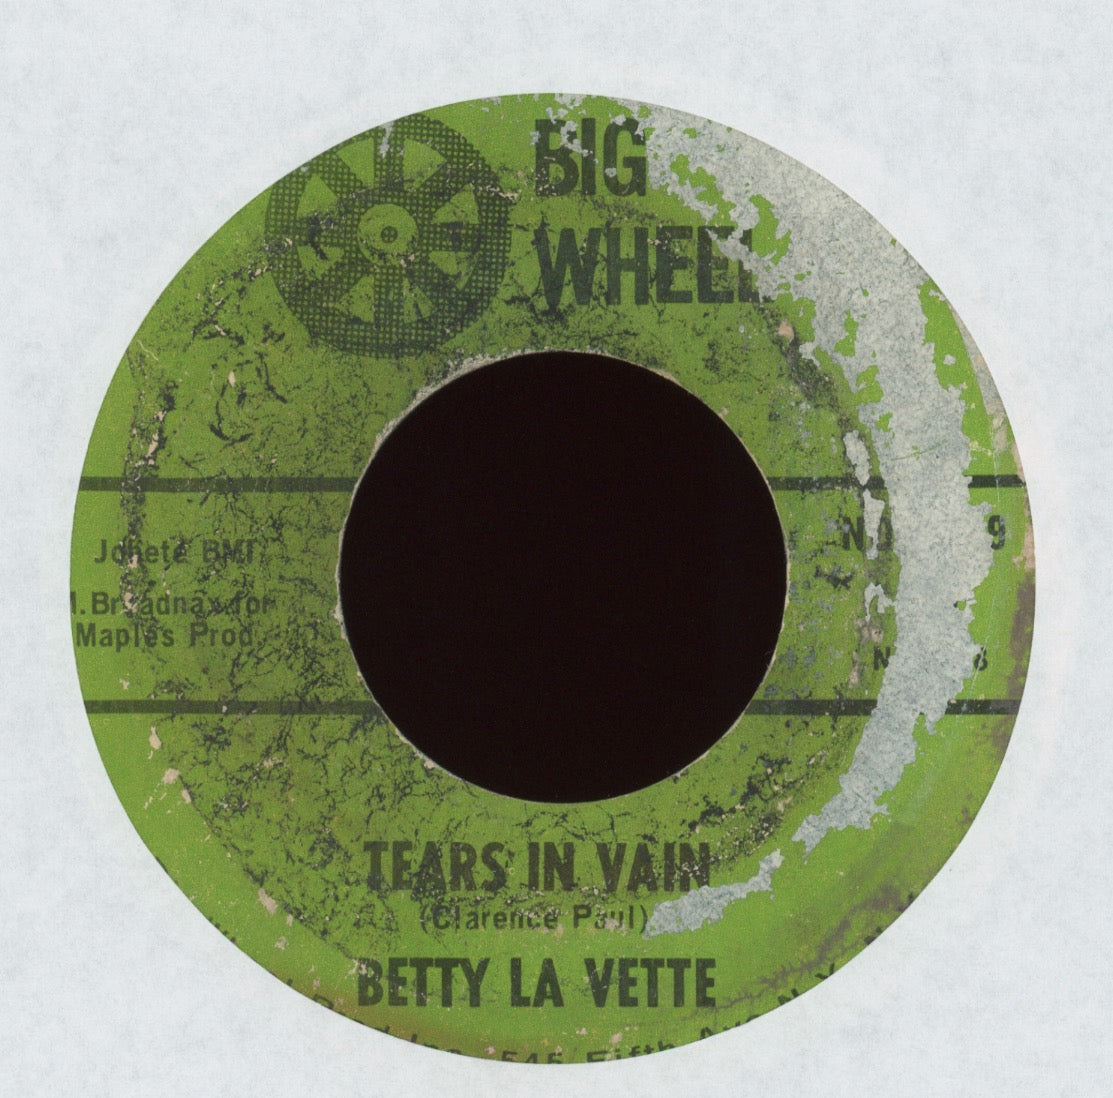 Bettye Lavette - I'm Holding On on Big Wheel